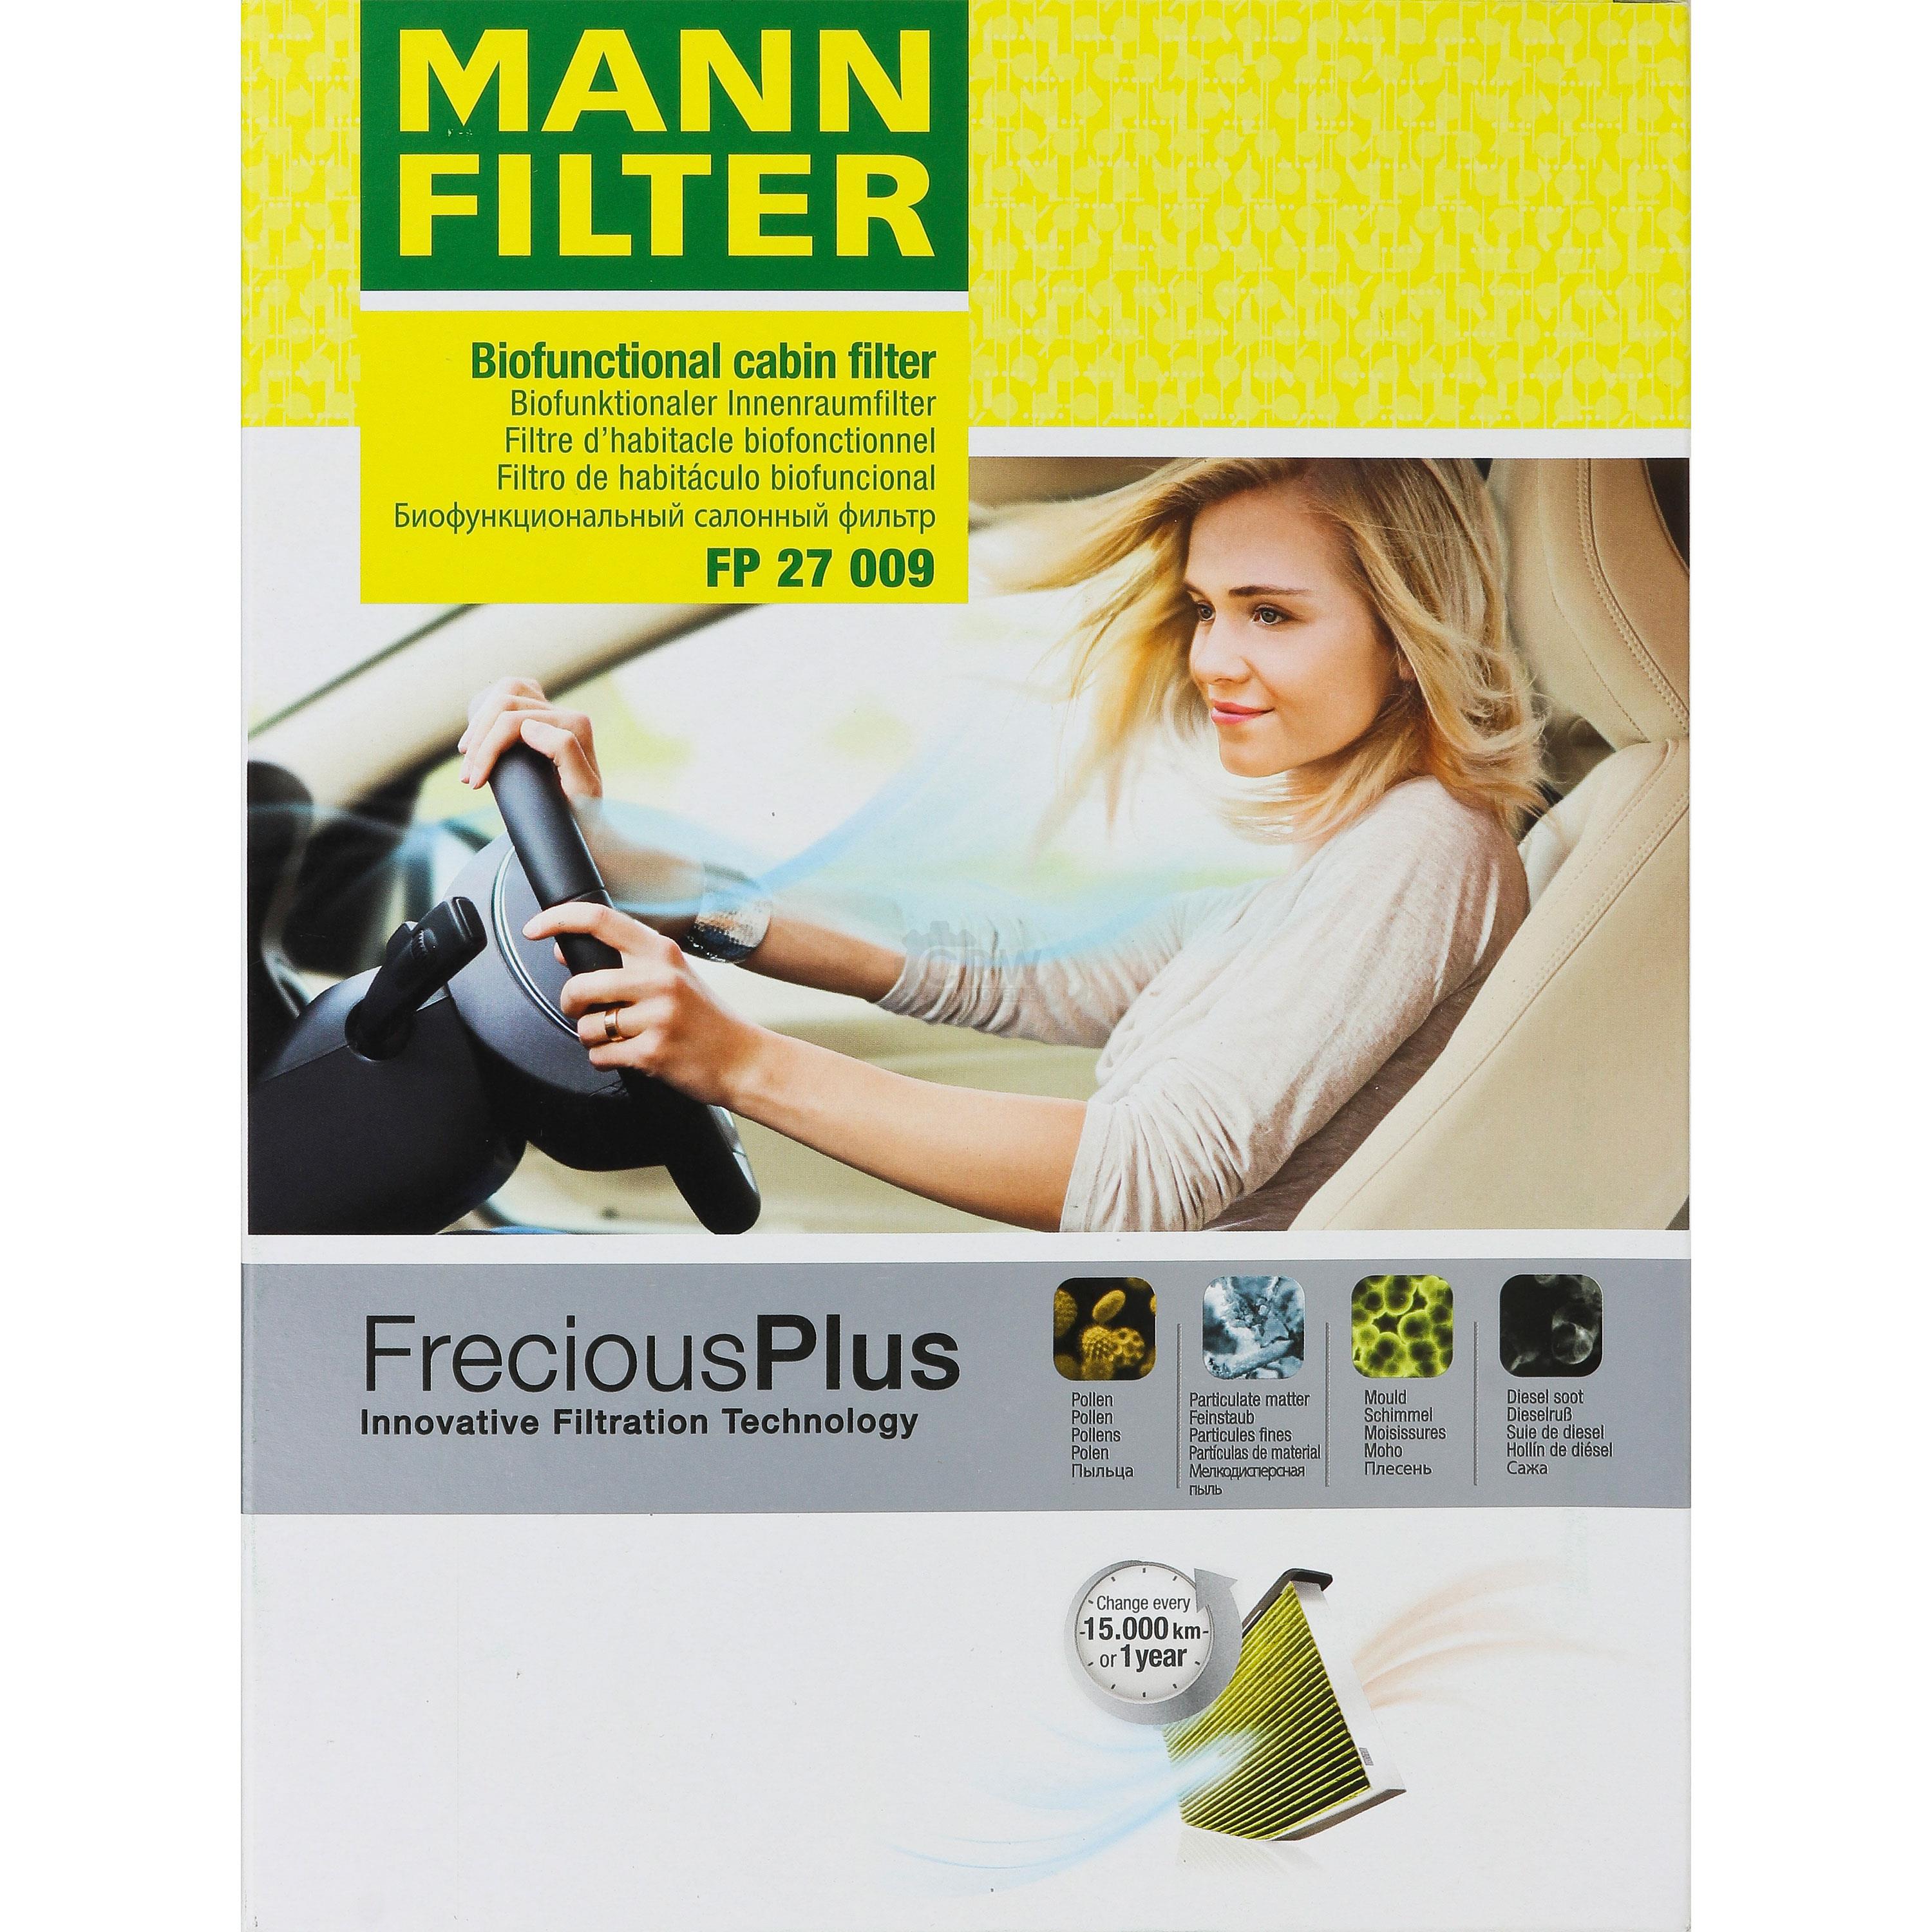 MANN-Filter Innenraumfilter Biofunctional für Allergiker FP 27 009